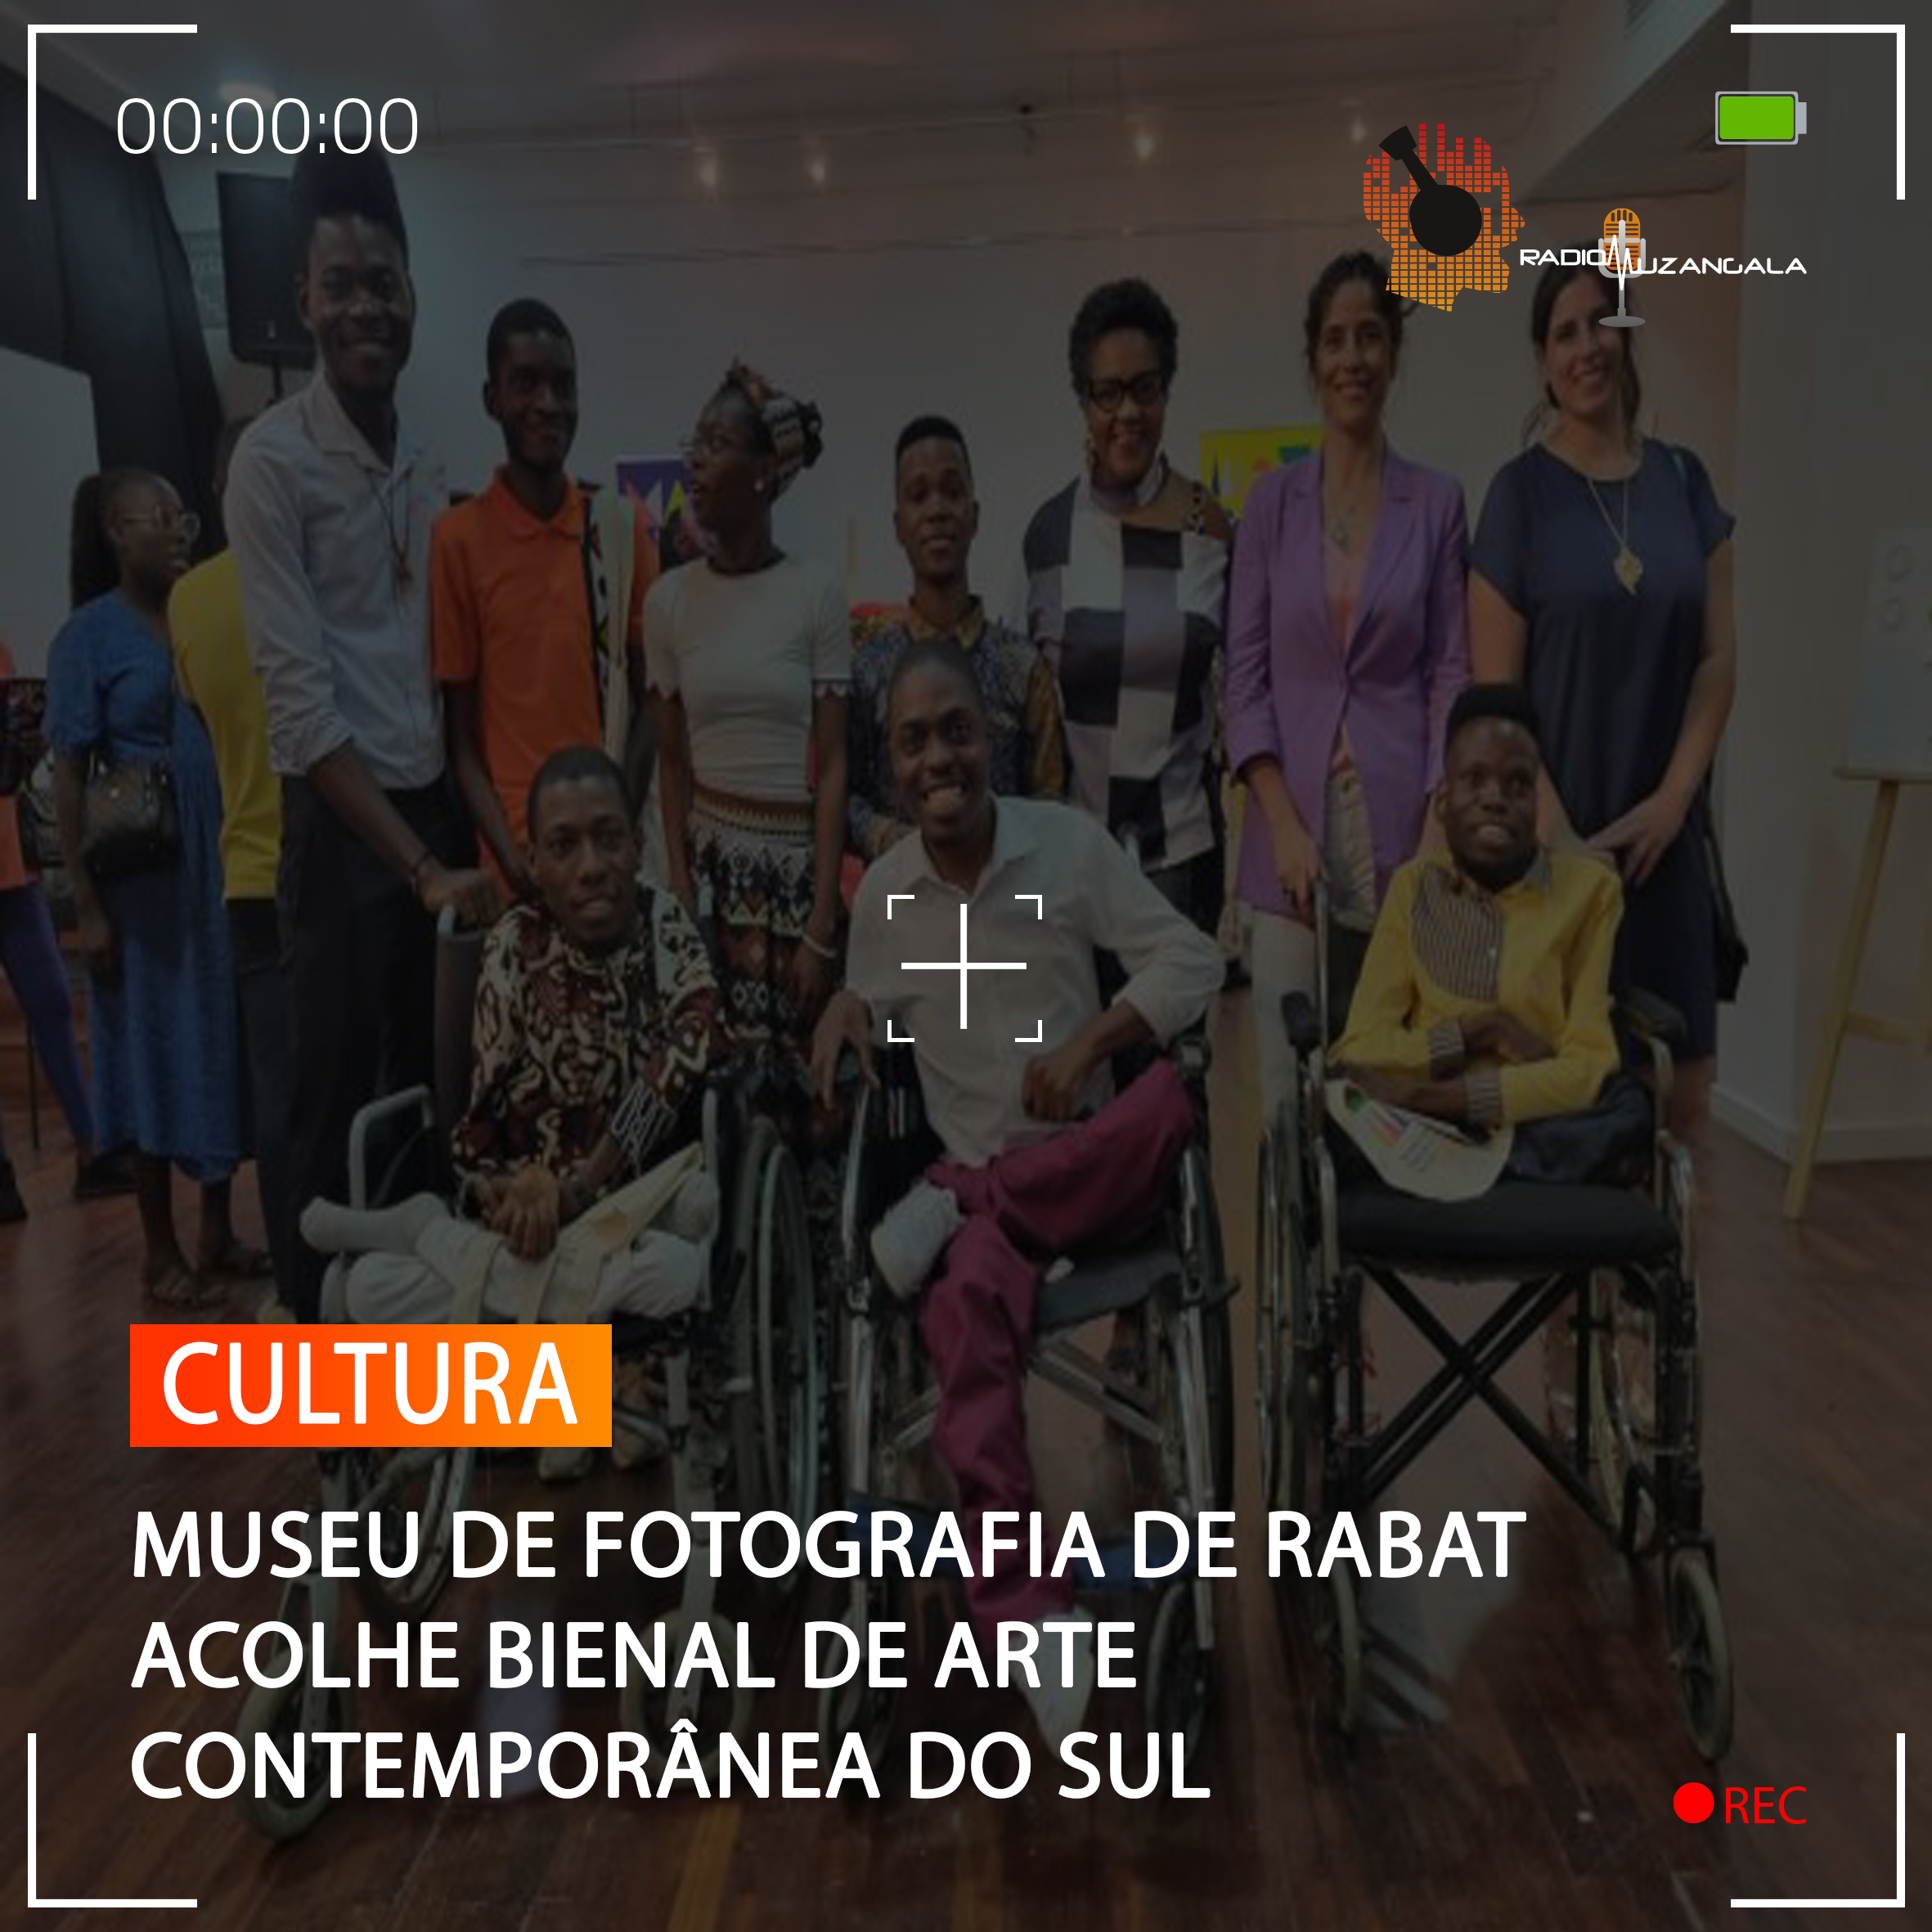  MUSEU DE FOTOGRAFIA DE RABAT ACOLHE BIENAL DE ARTE CONTEMPORÂNEA DO SUL